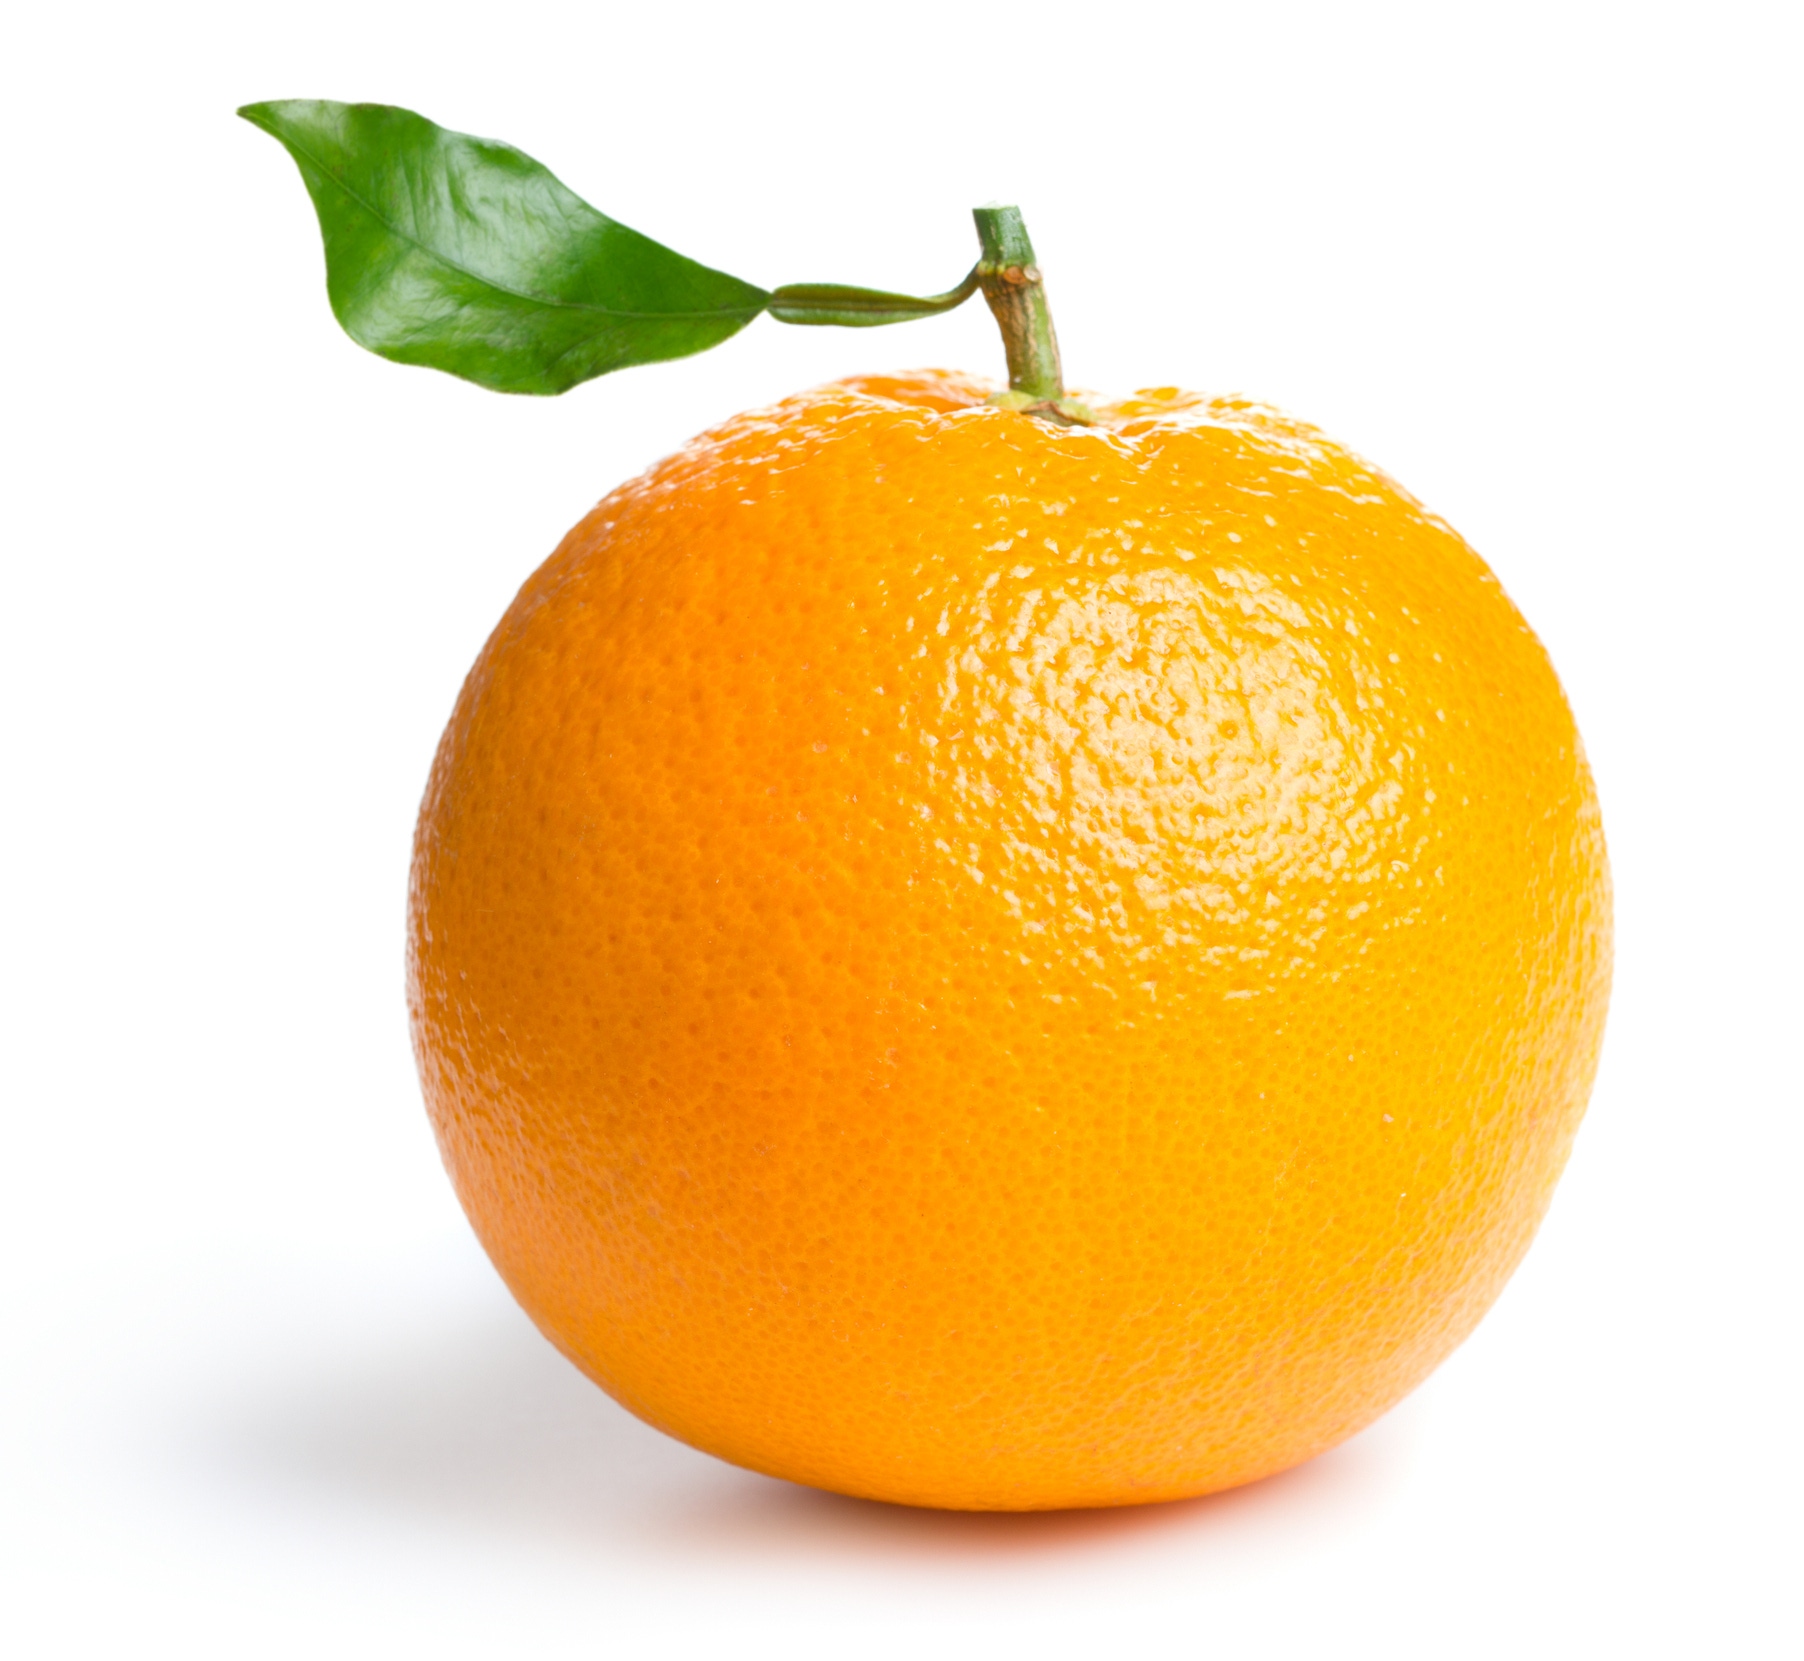 1 small orange